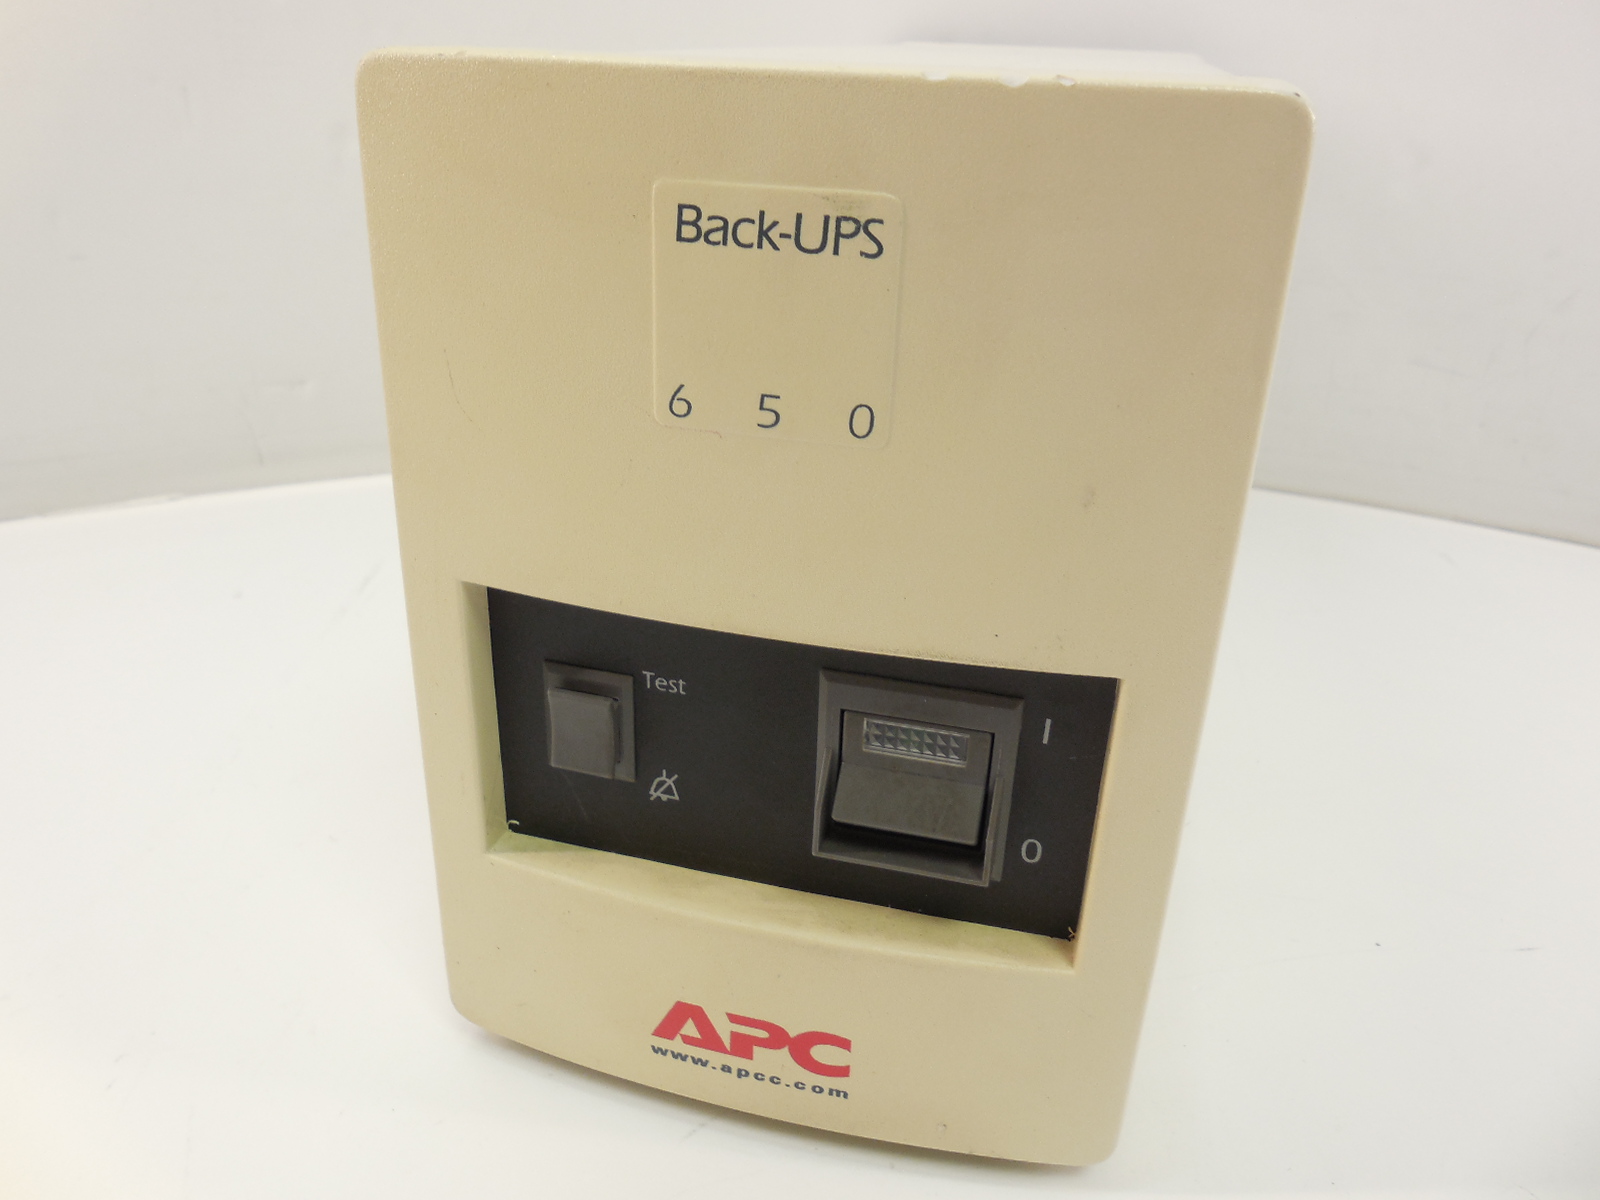 Ups 650 аккумулятор. APC back-ups bk650mi. Back ups 650. ИБП APC back-ups 650. APC back-ups 650 mi.